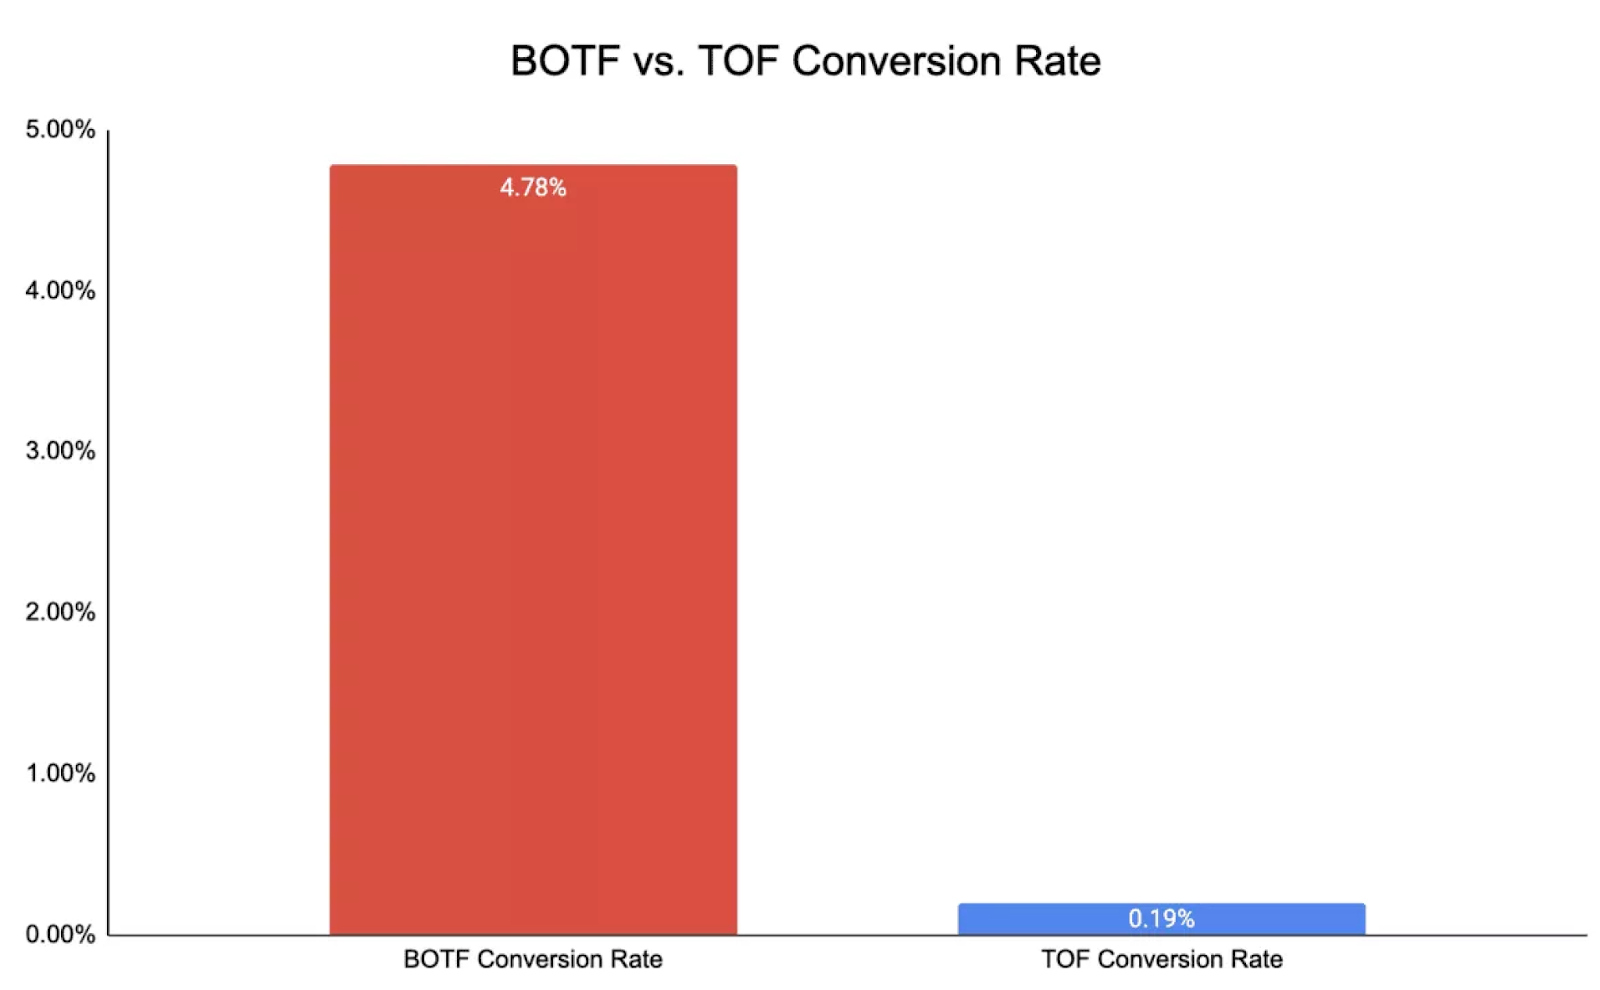 BOTF vs TOF Conversion Rate: 4.78% vs 0.19%